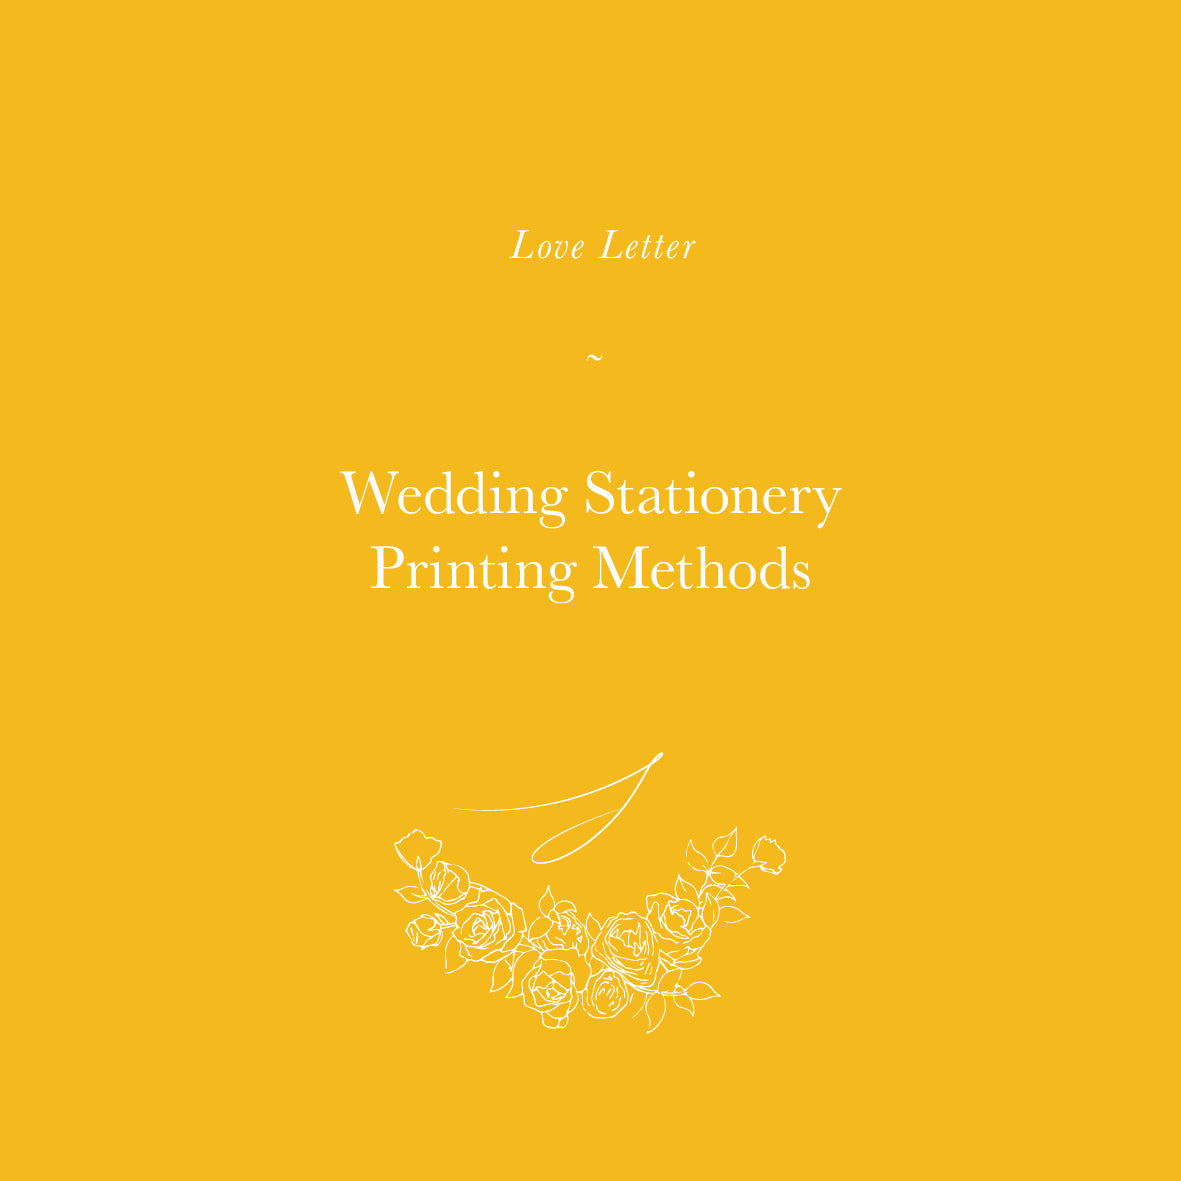 Wedding Stationery Printing Methods